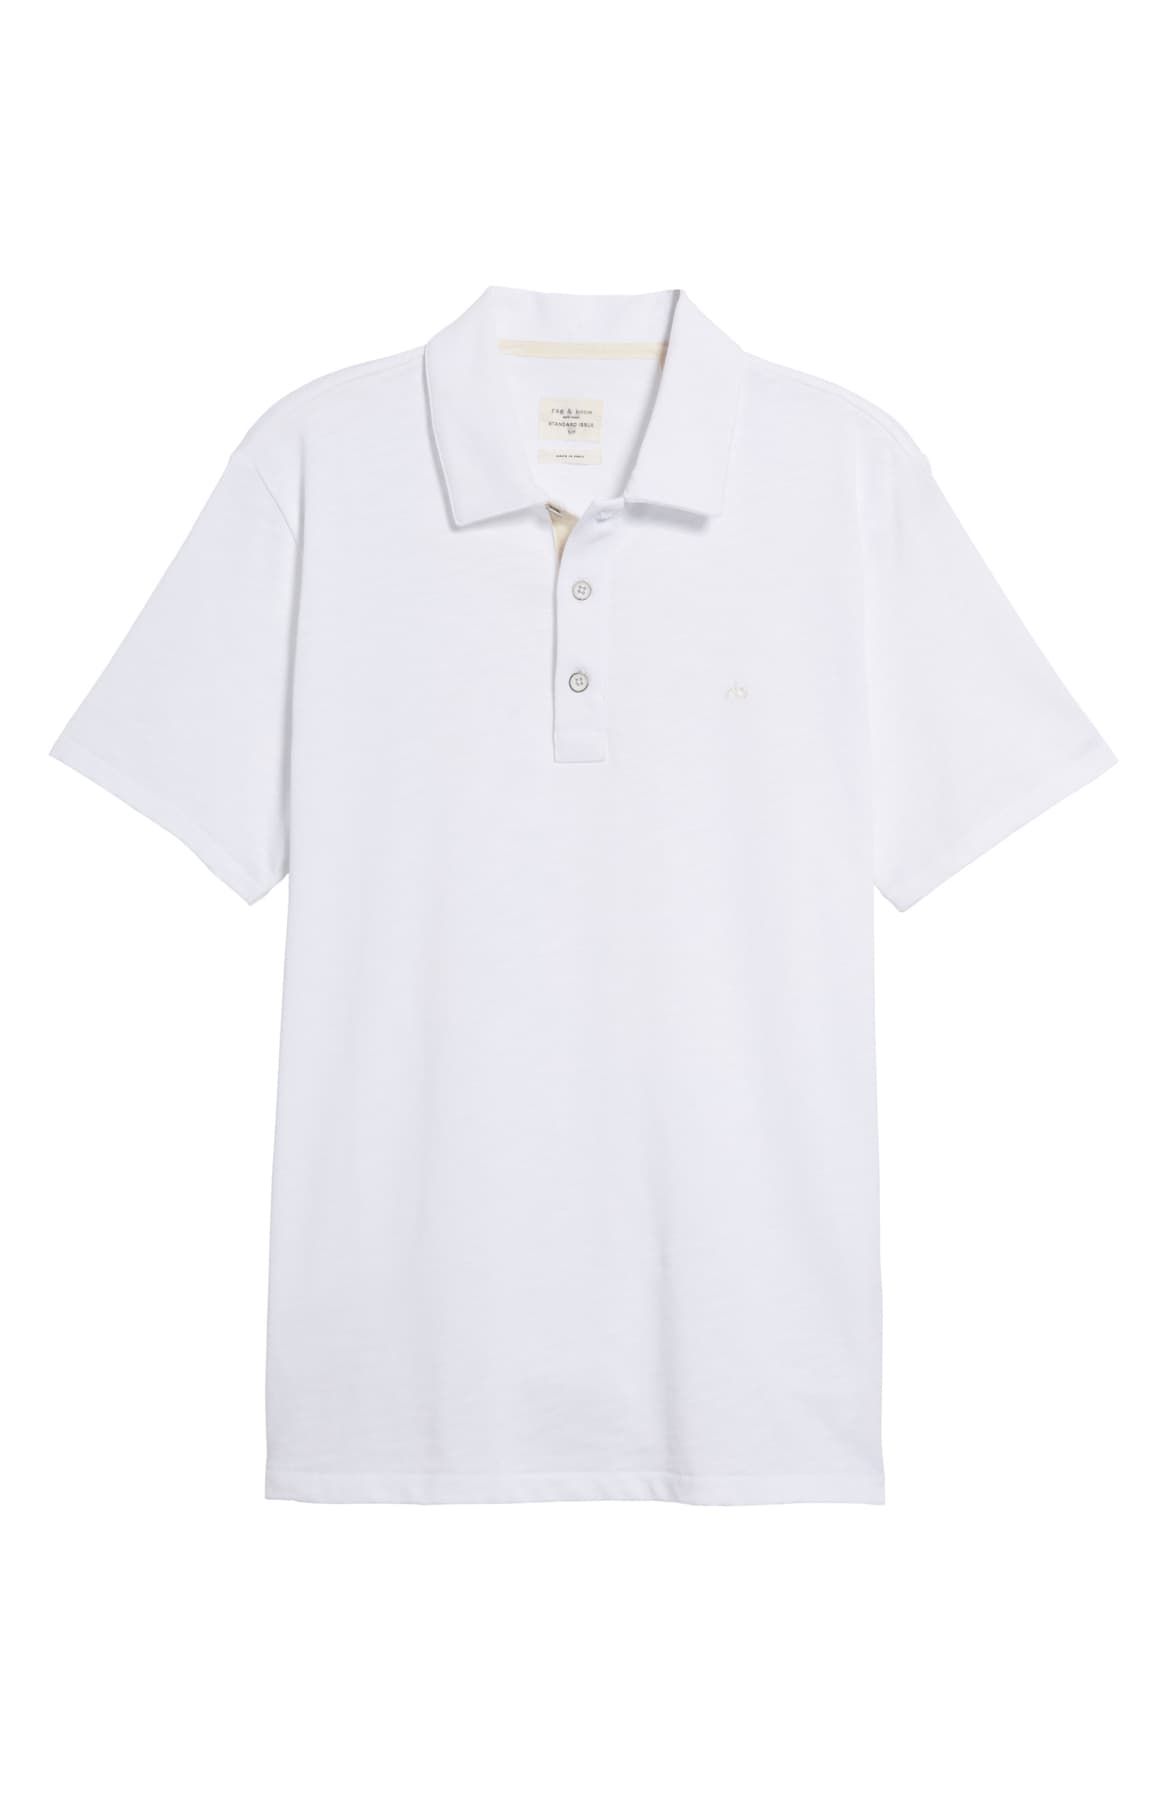 Хлопковая рубашка-поло стандартного кроя с короткими рукавами Standard Issue Rag & Bone